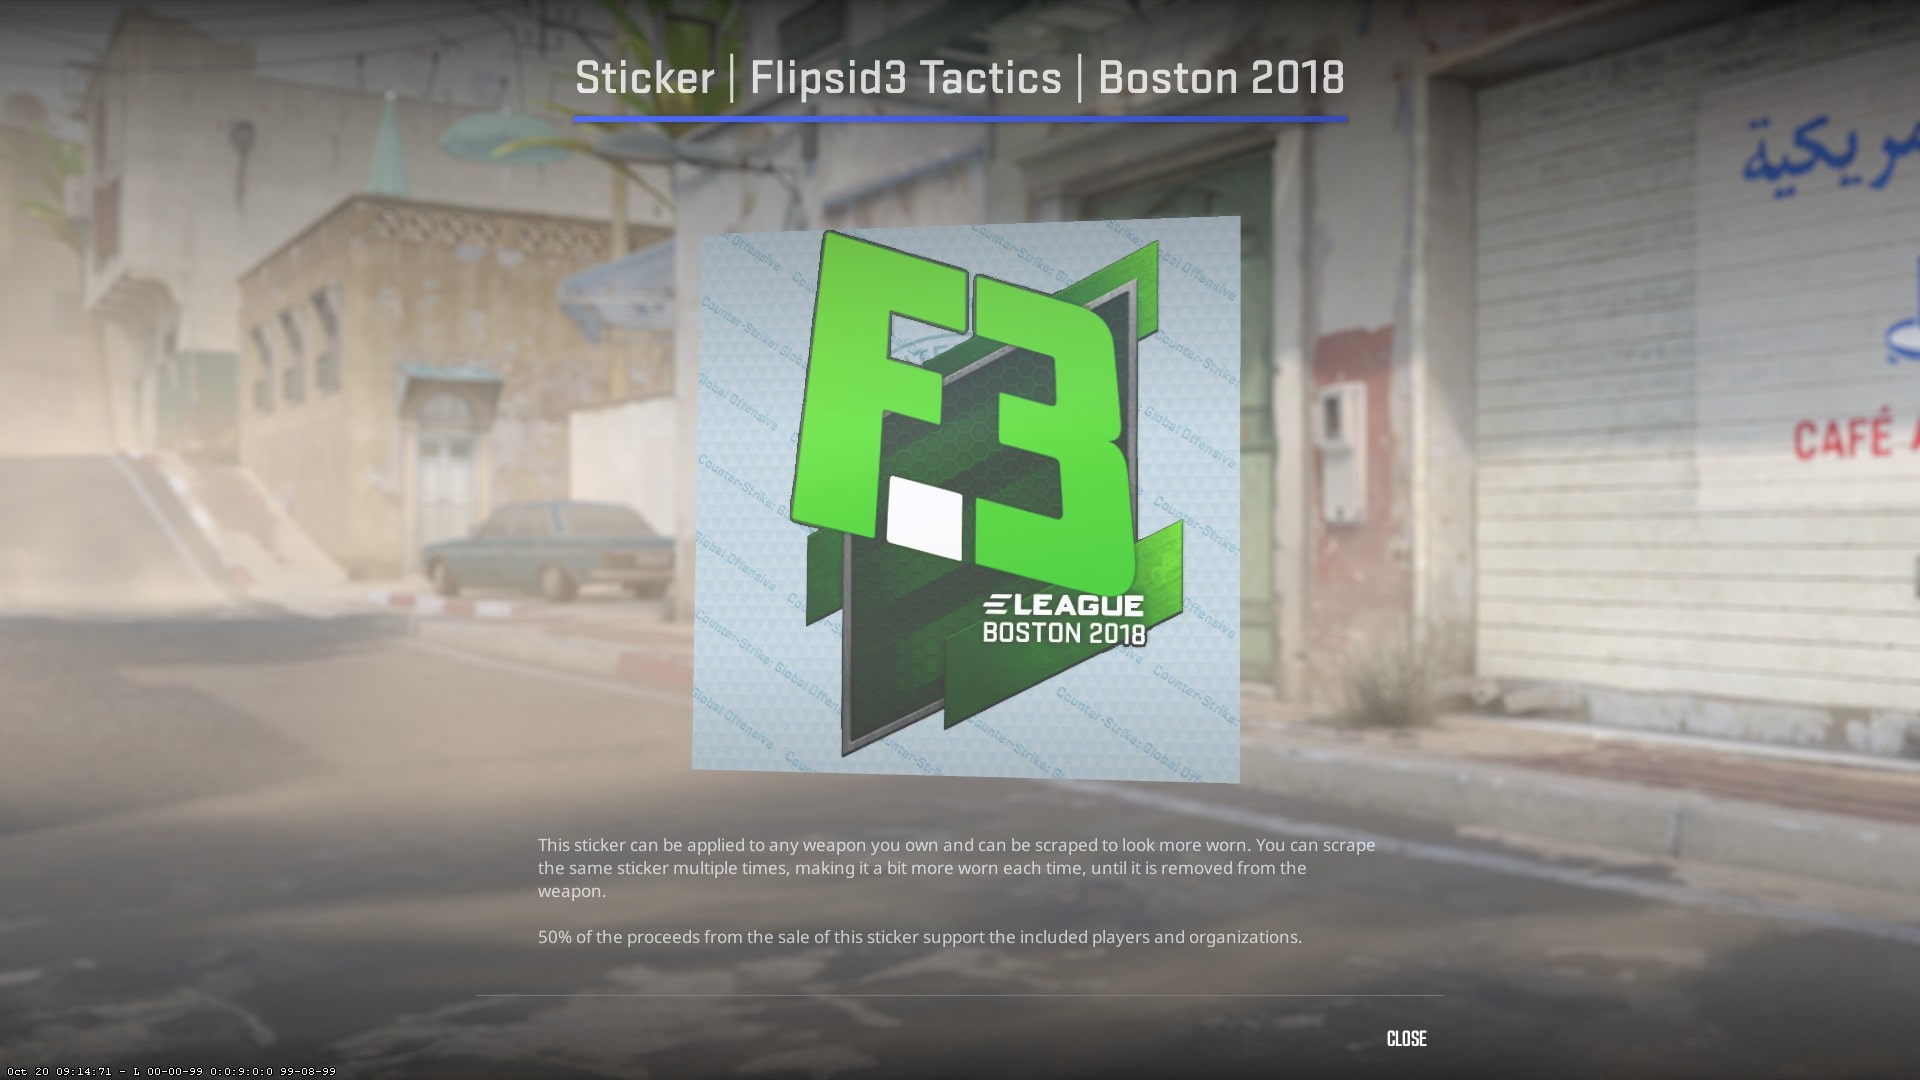 Sticker | Flipsid3 Tactics | Boston 2018